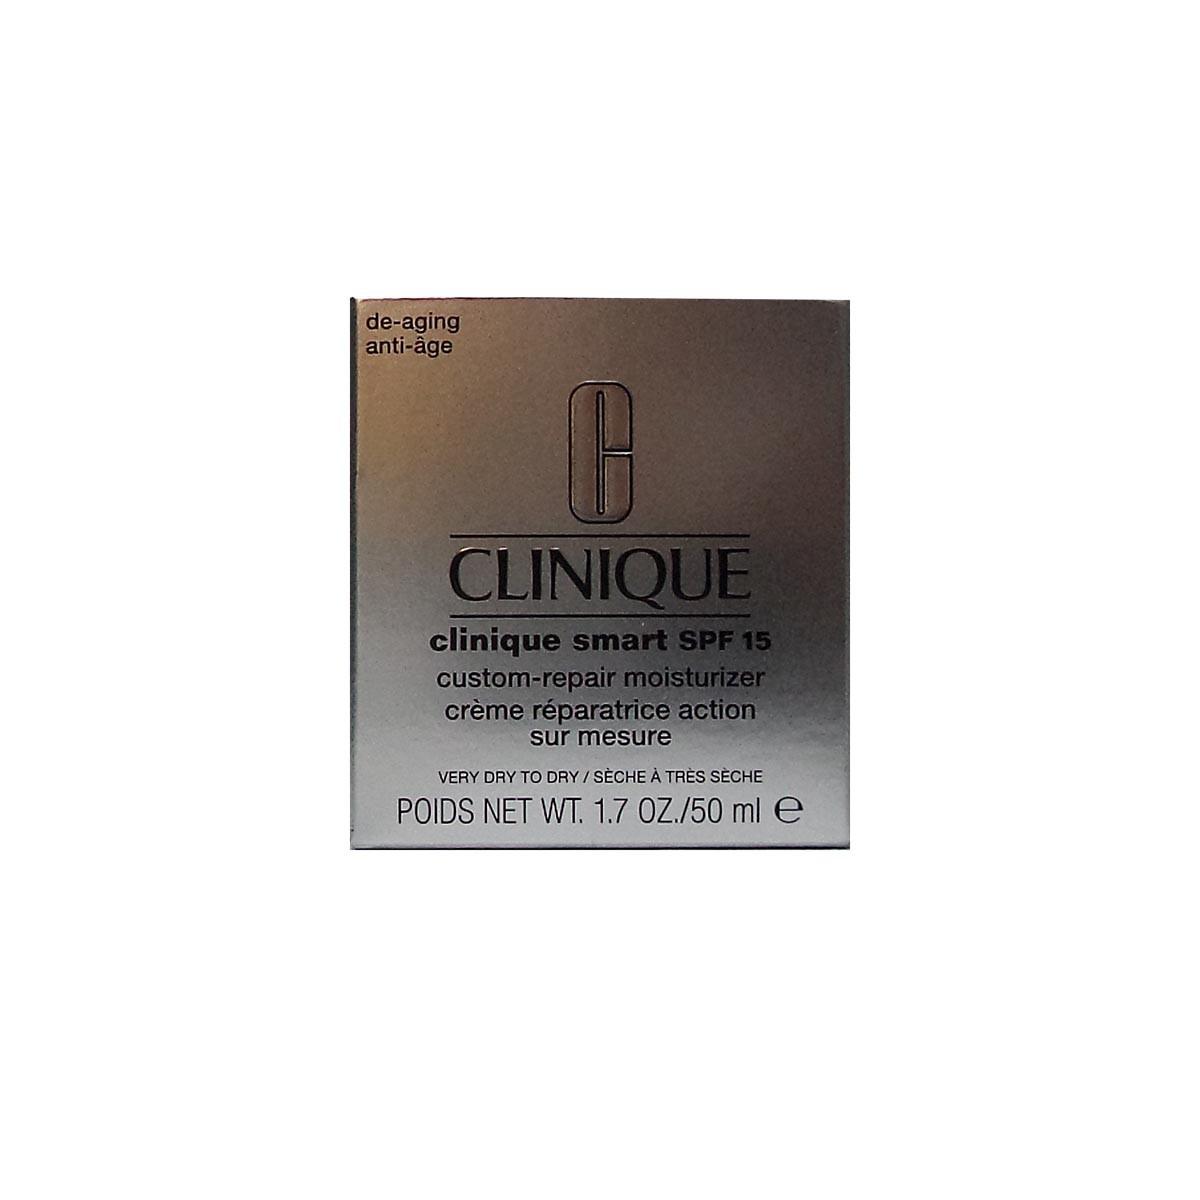 clinique-crema-smart-spf15-custom-repair-moisturizer-antiage-seche-a-tres-seche-50ml-i